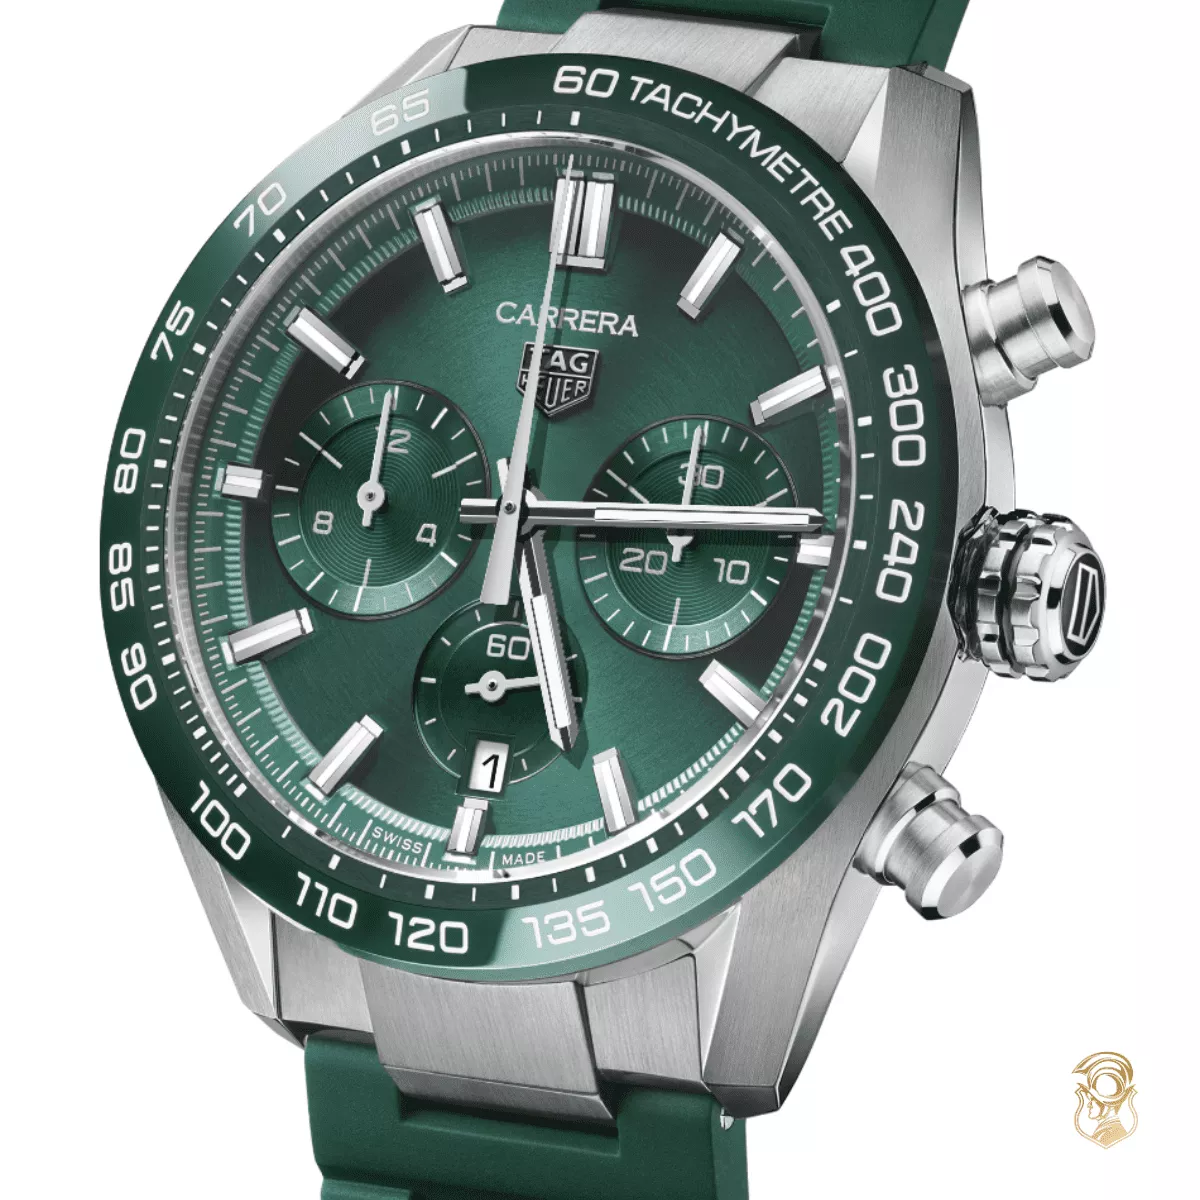 Tag Heuer Carrera Green Chronograph Watch 44mm